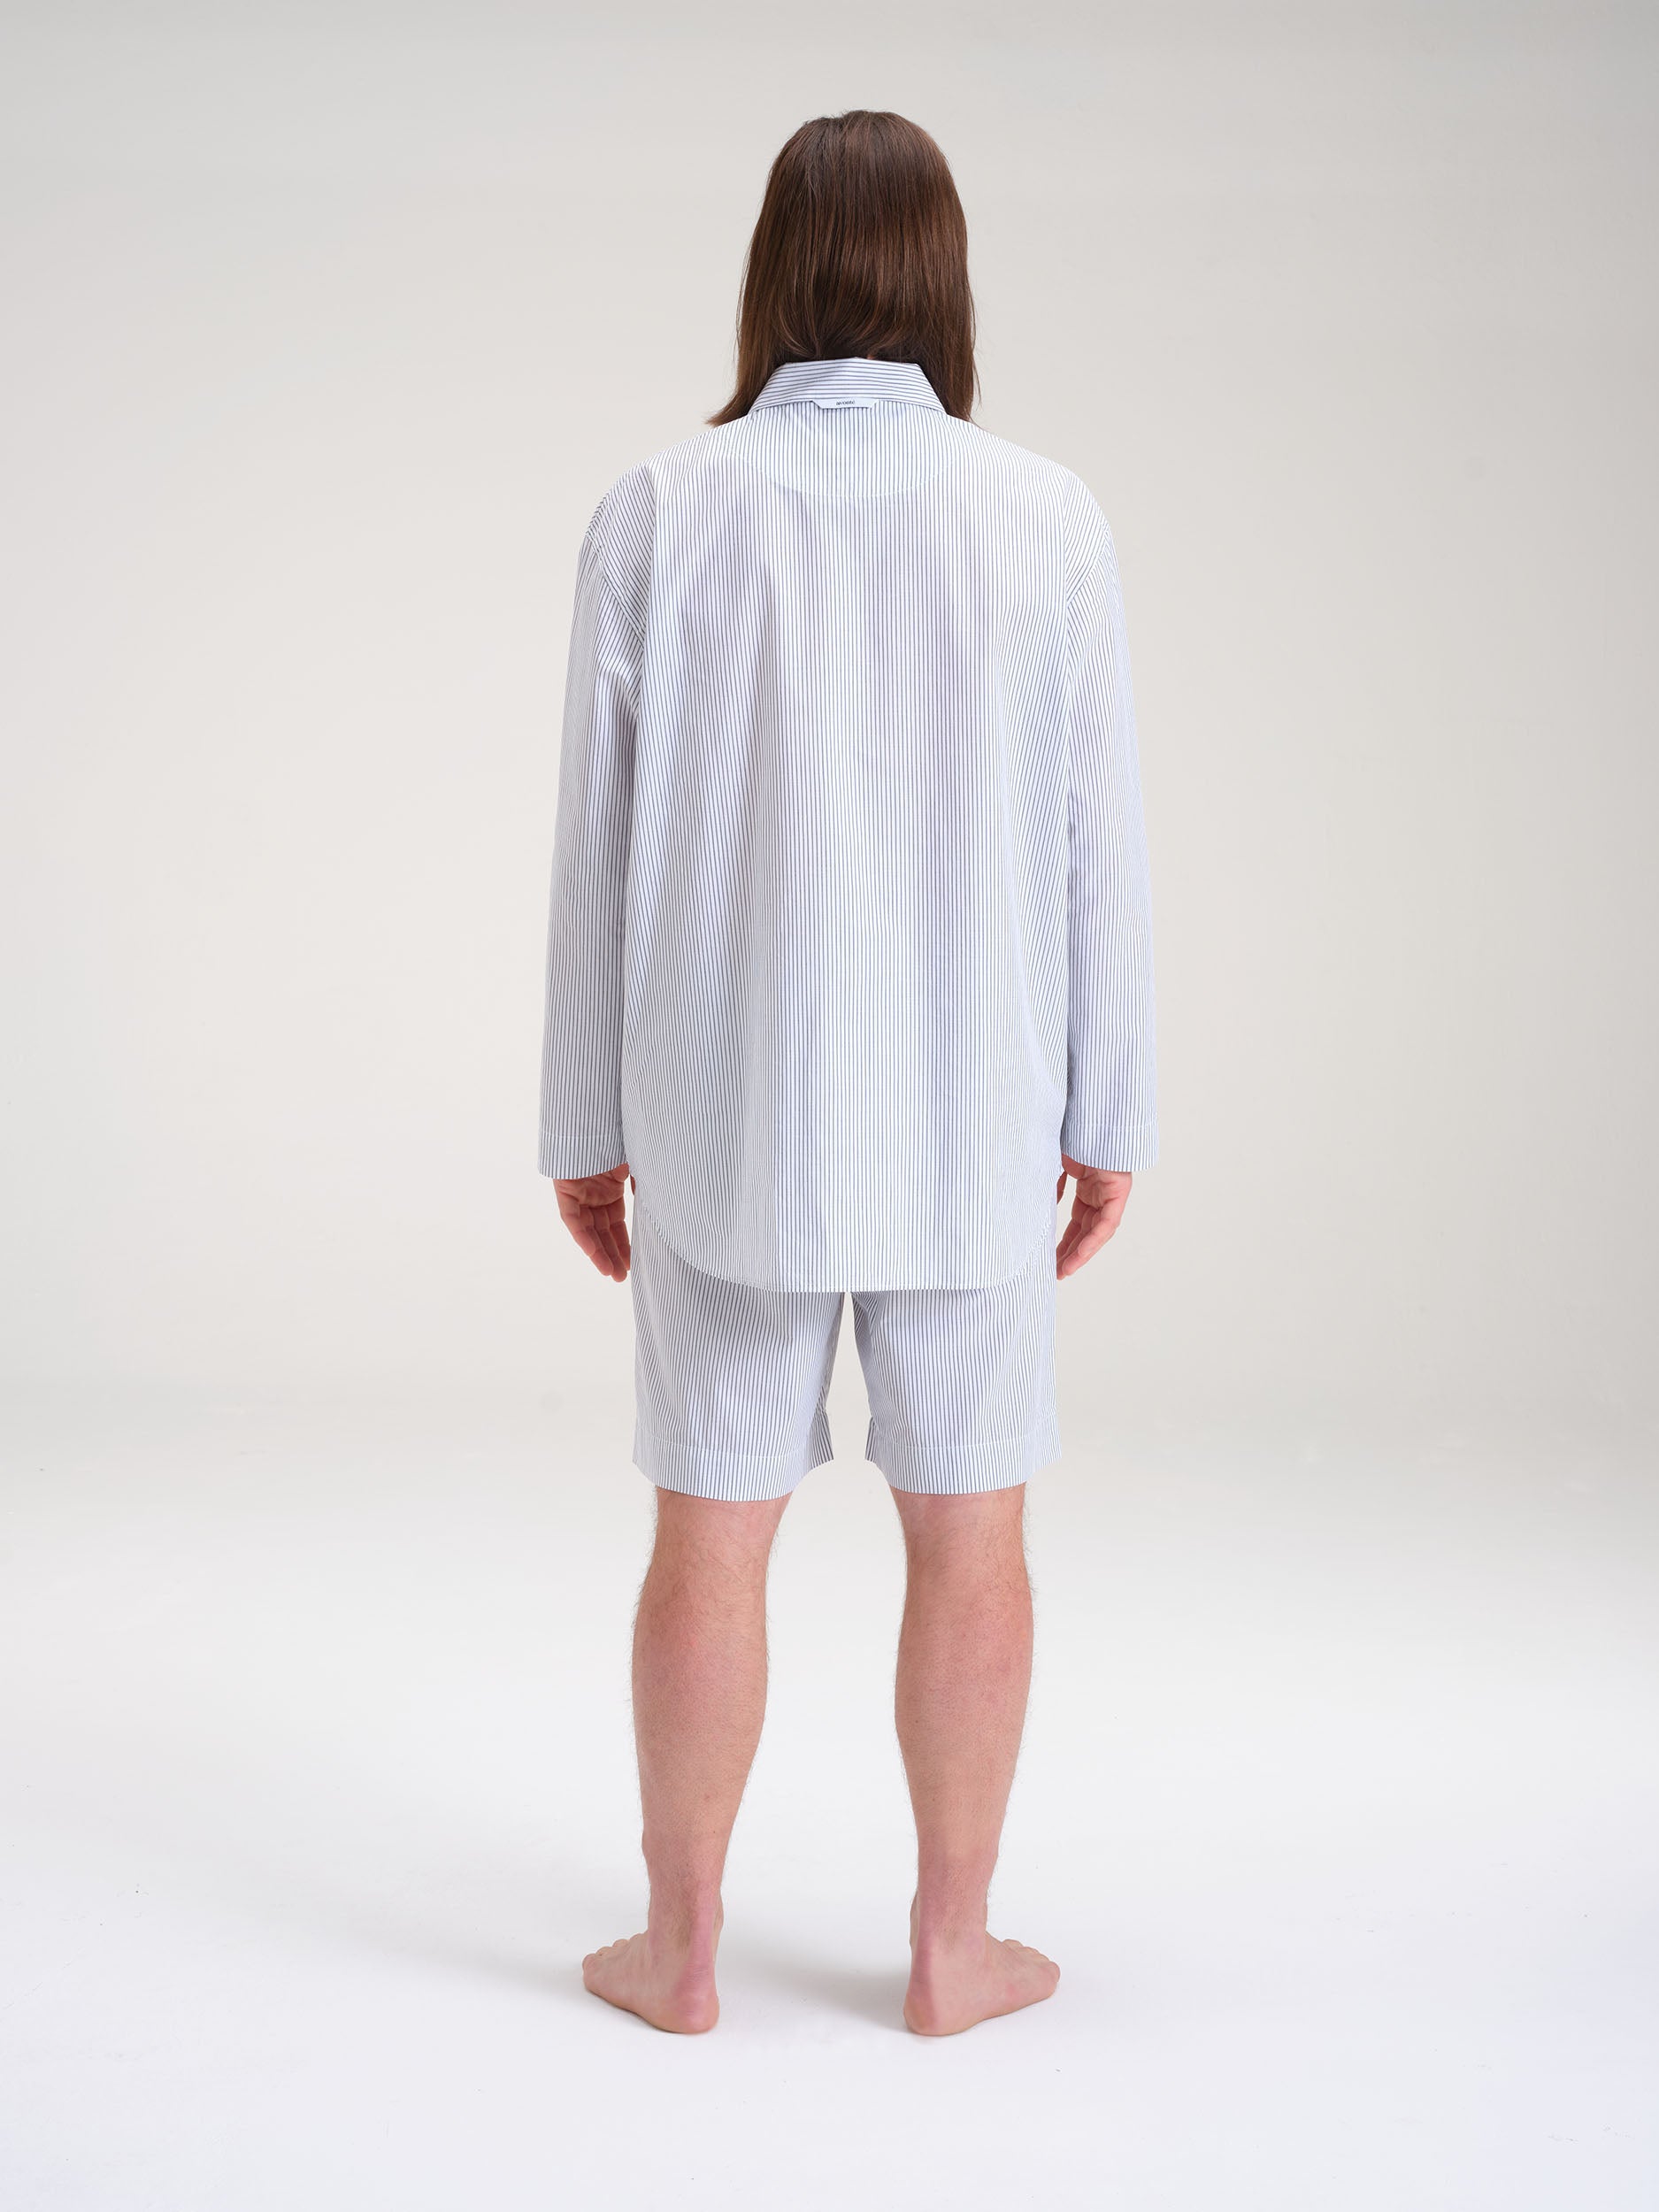 Pyjama Set (Shirt+ Shorts) - favourite fresh stripe